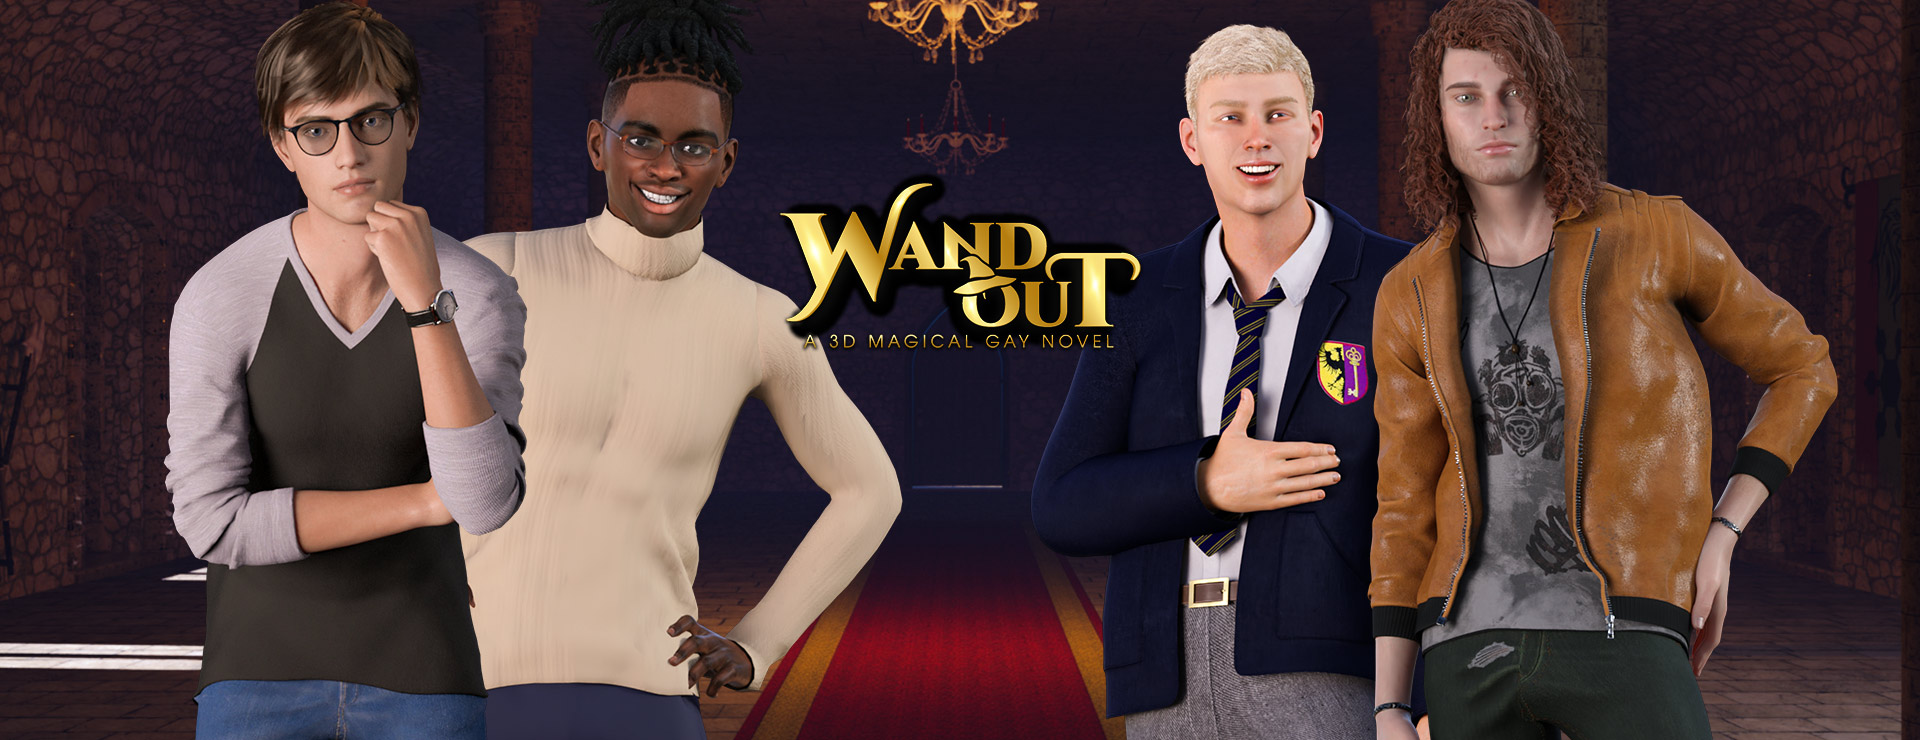 Wand Out - ビジュアルノベル ゲーム